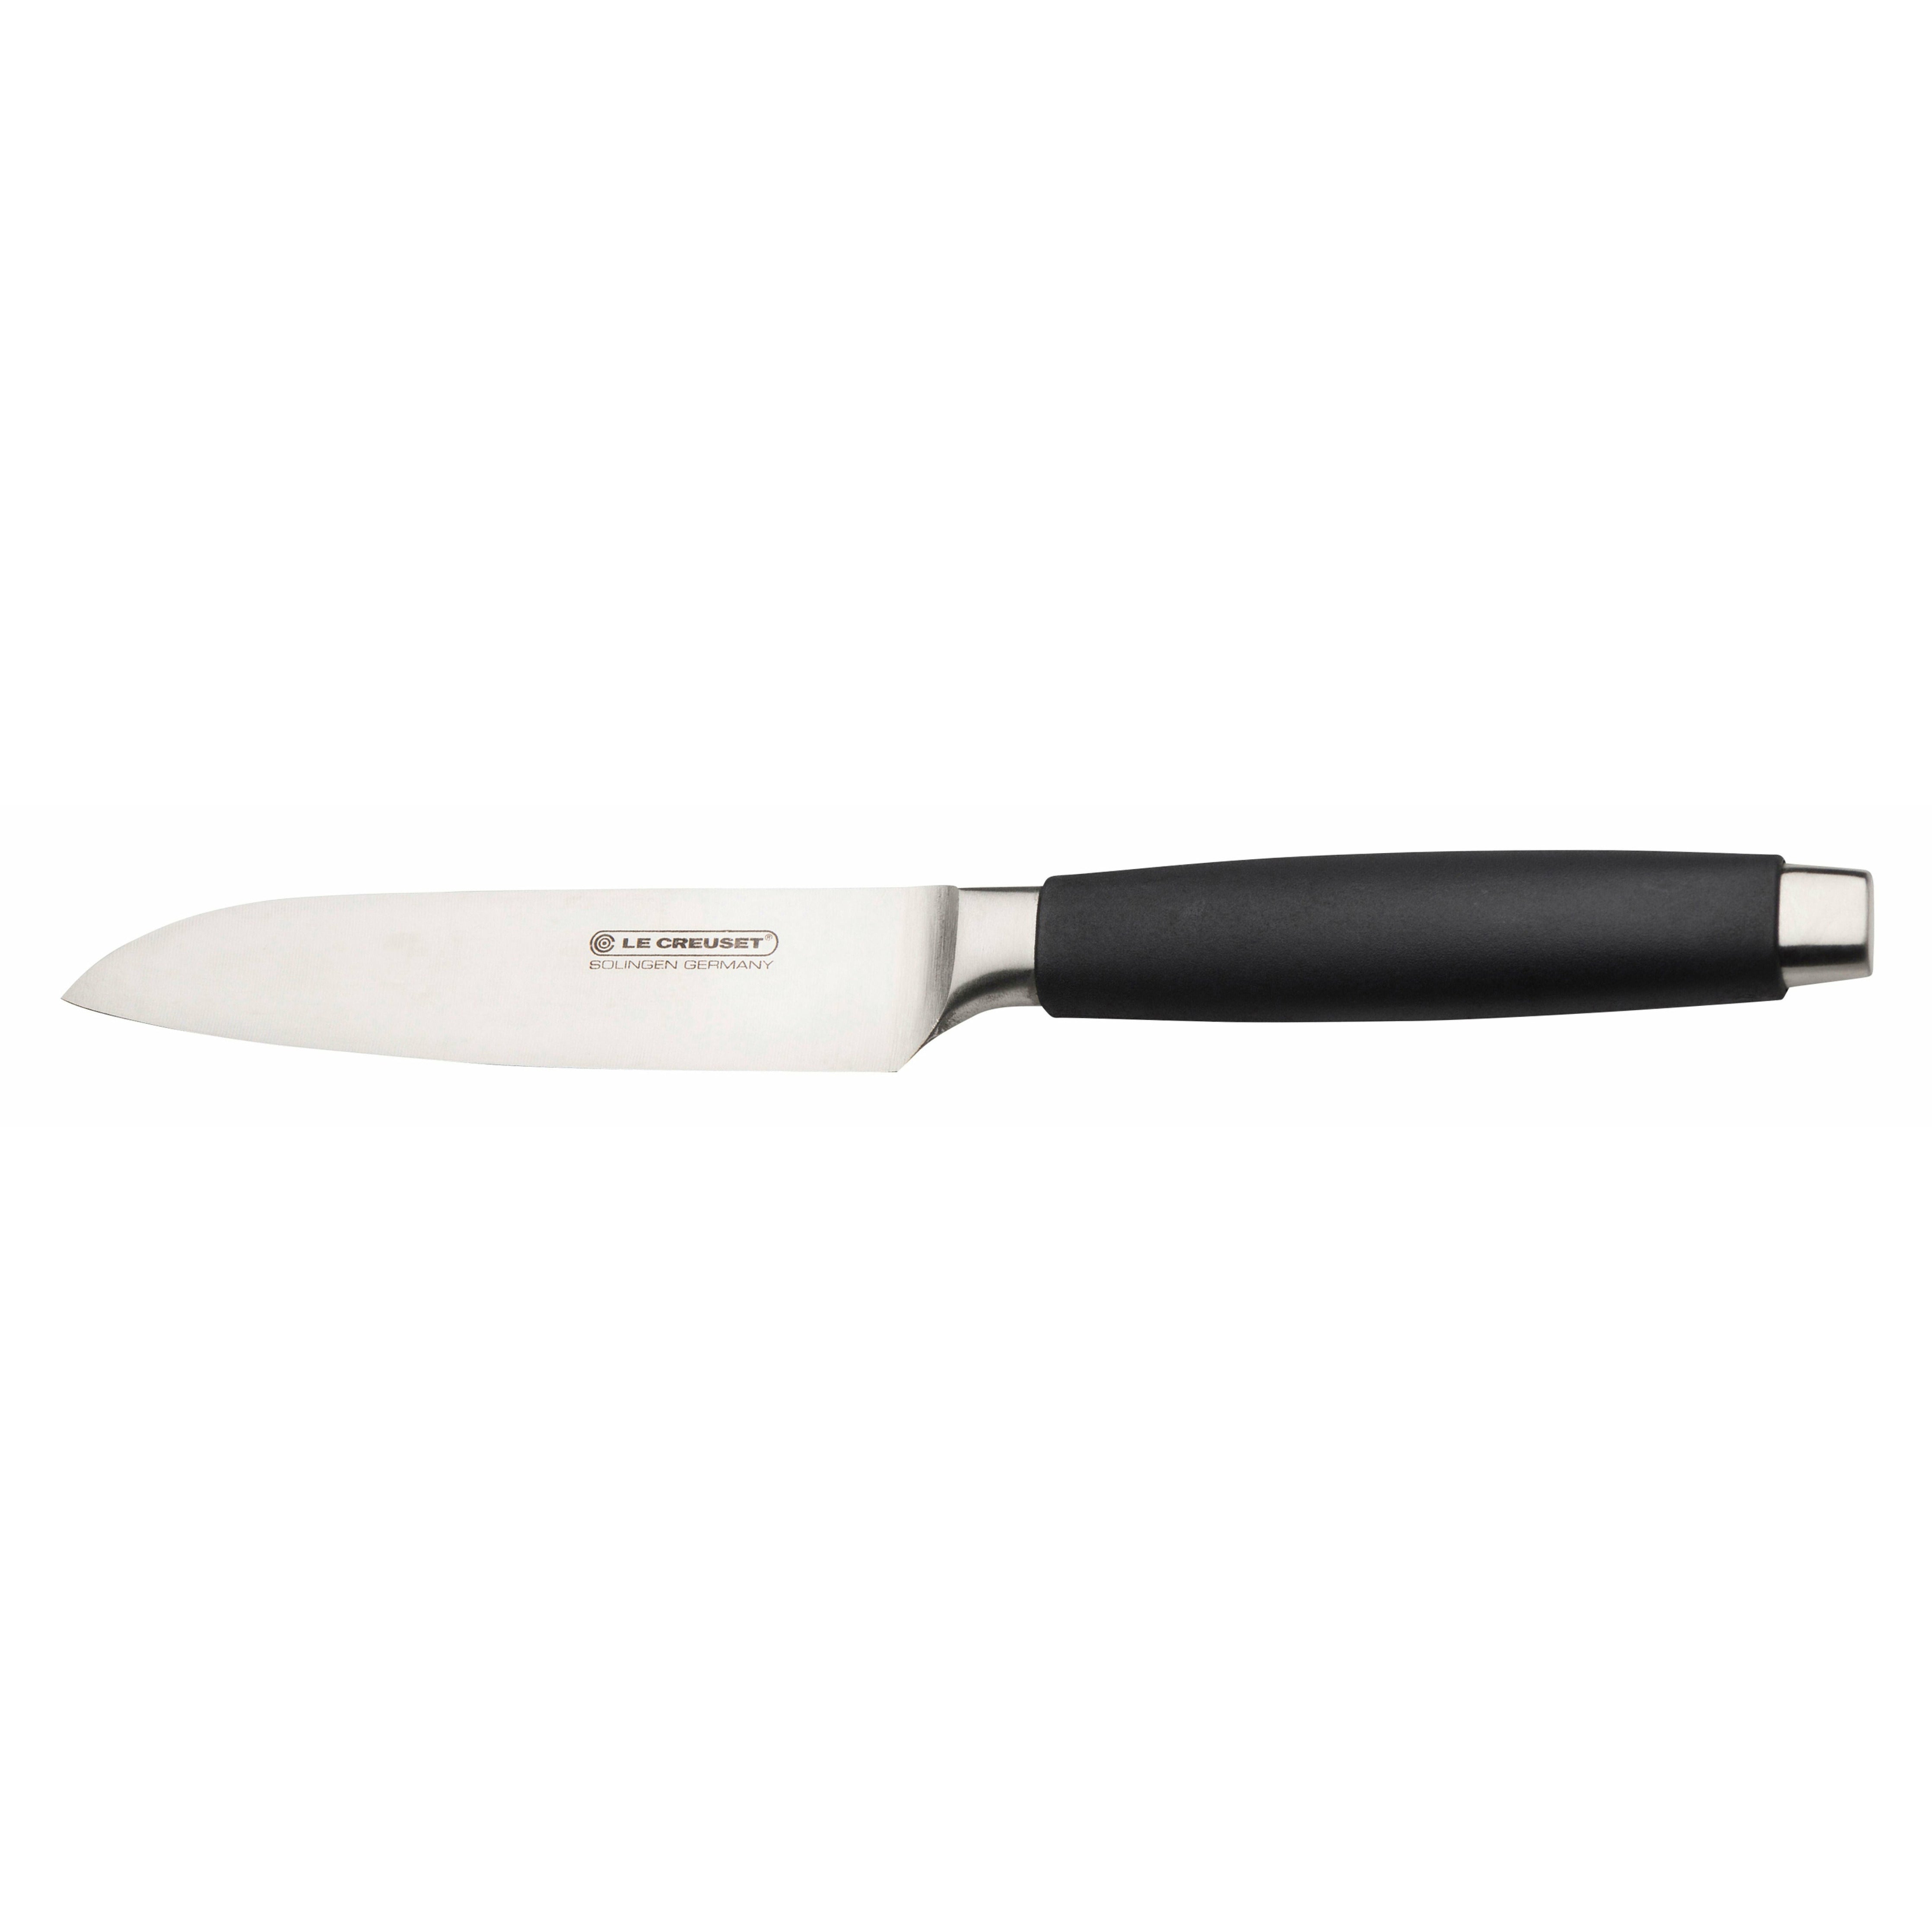 Le Creuset Santoku Knife Standard With Black Handle, 13 Cm